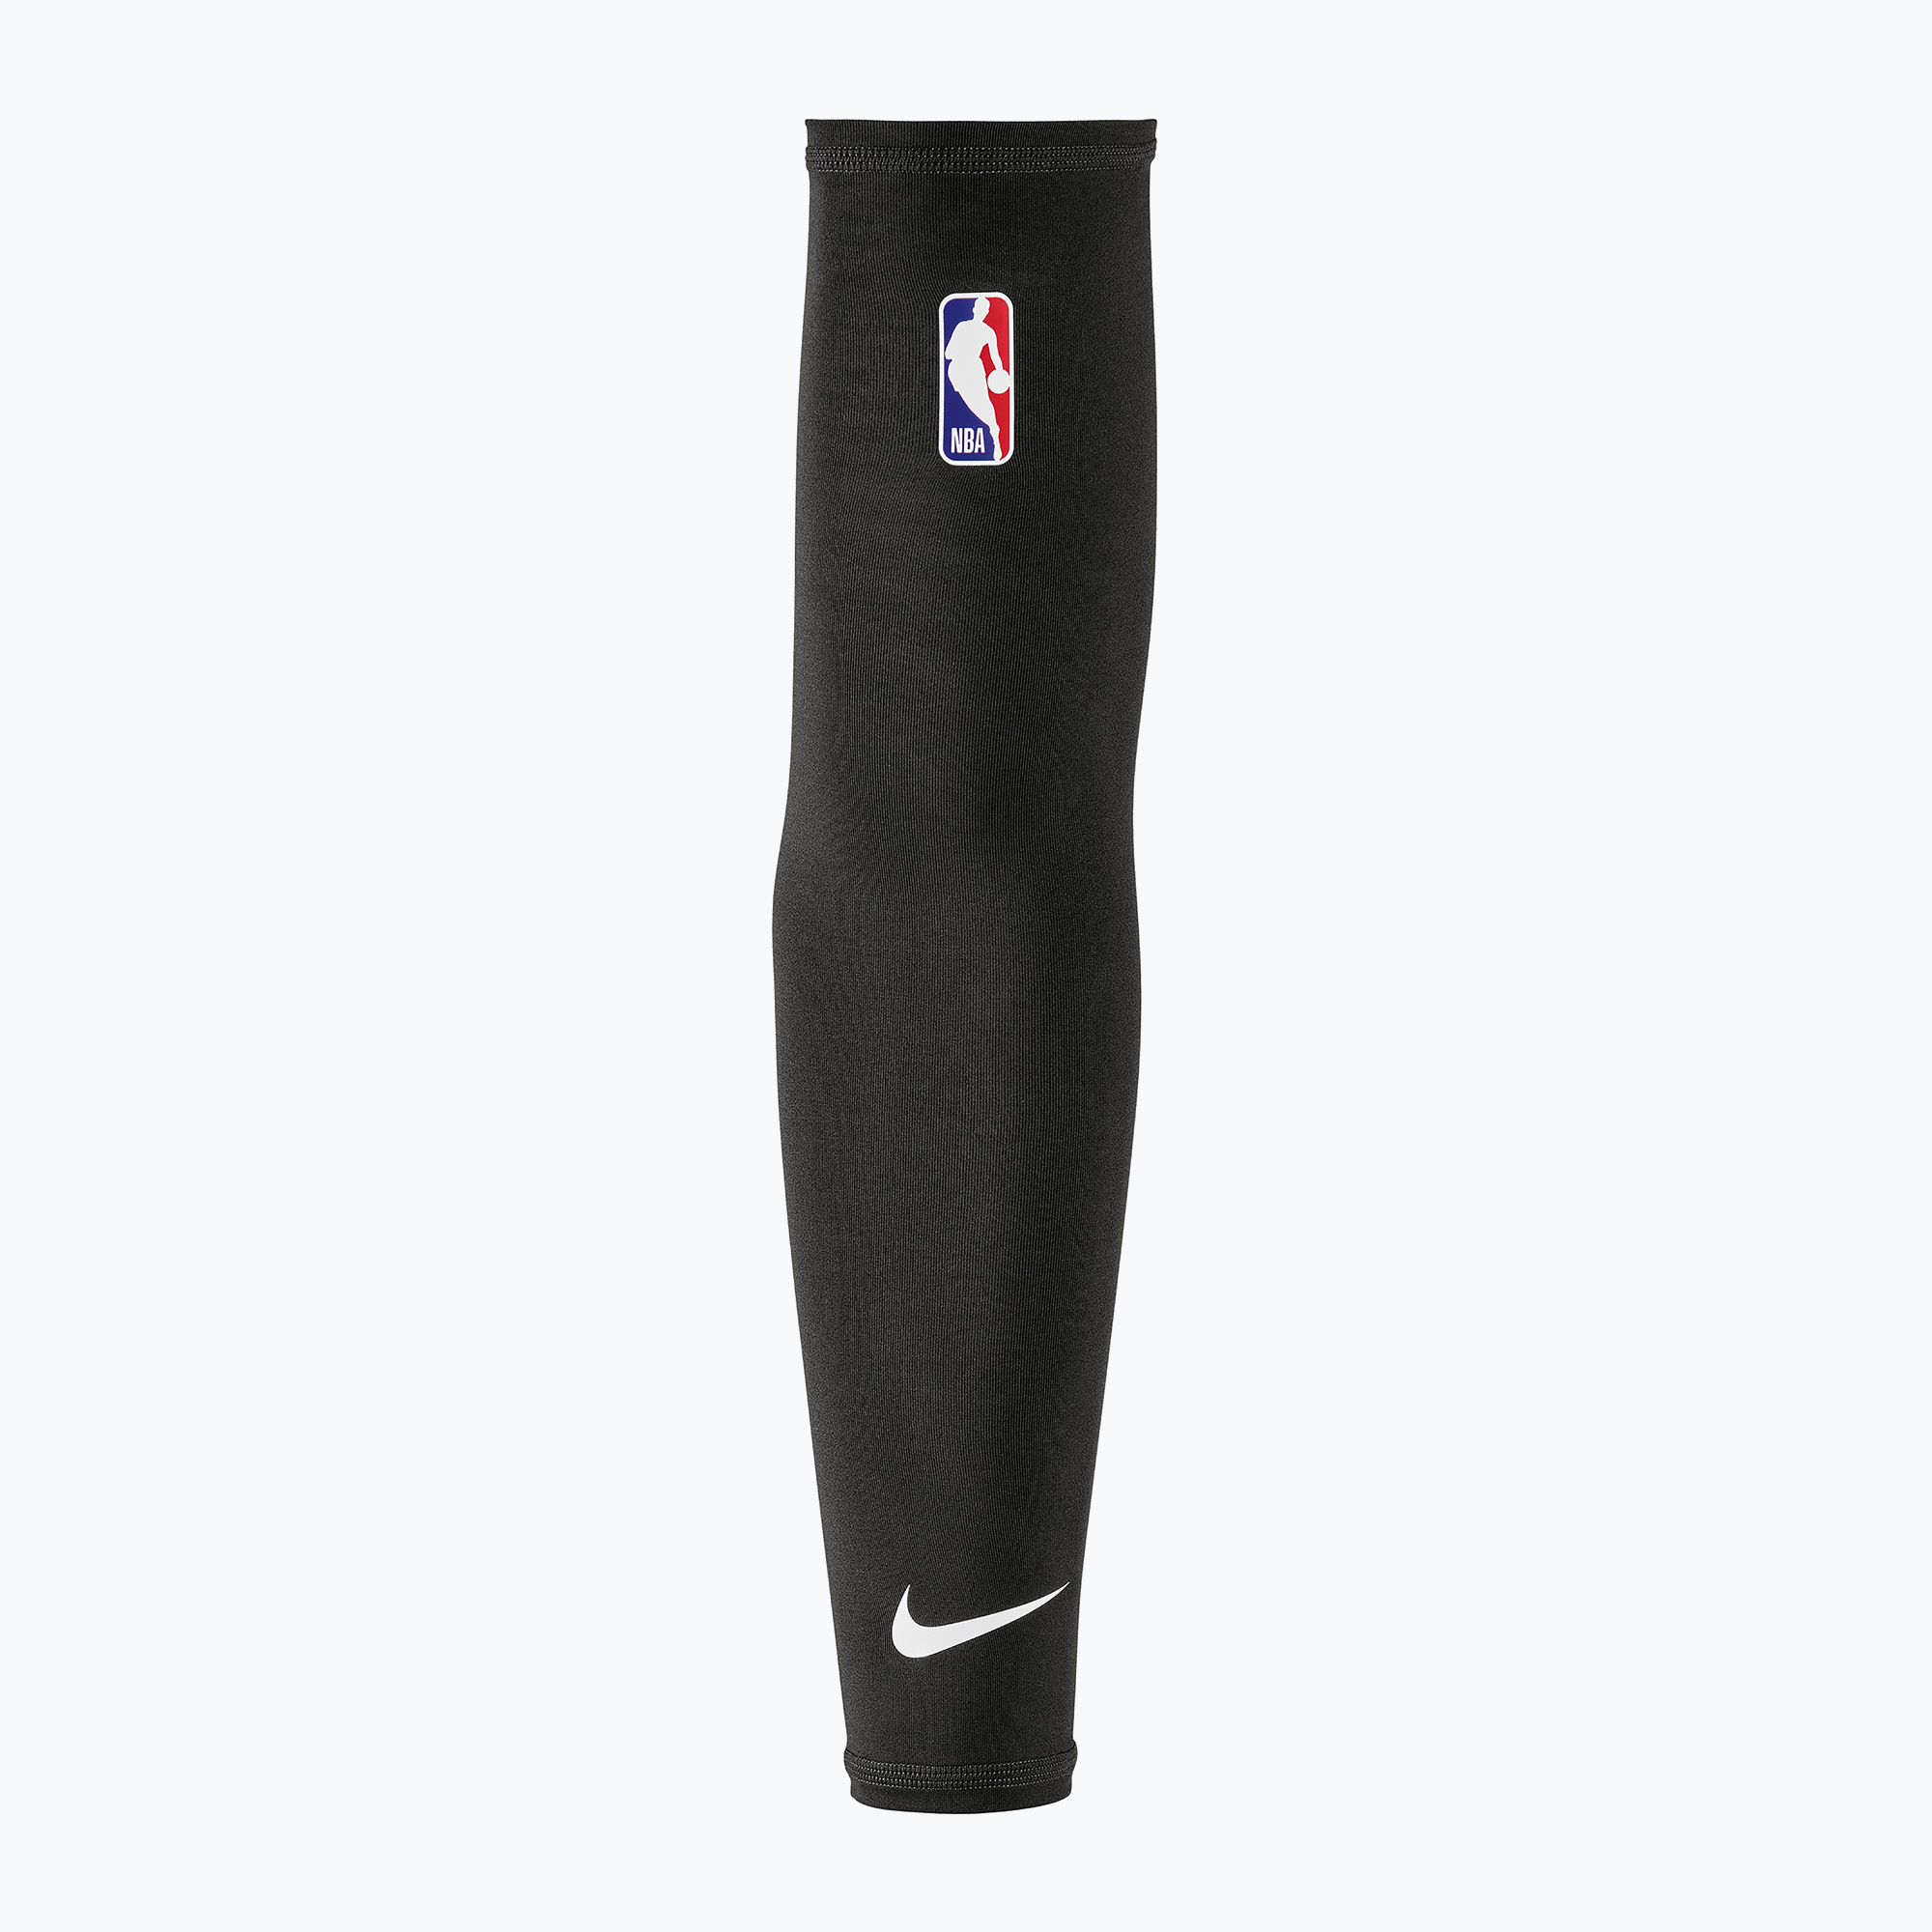 Фото - Інший інвентар Nike Rękaw koszykarski  Shooter Sleeve 2.0 NBA black/white | WYSYŁKA W 24H 